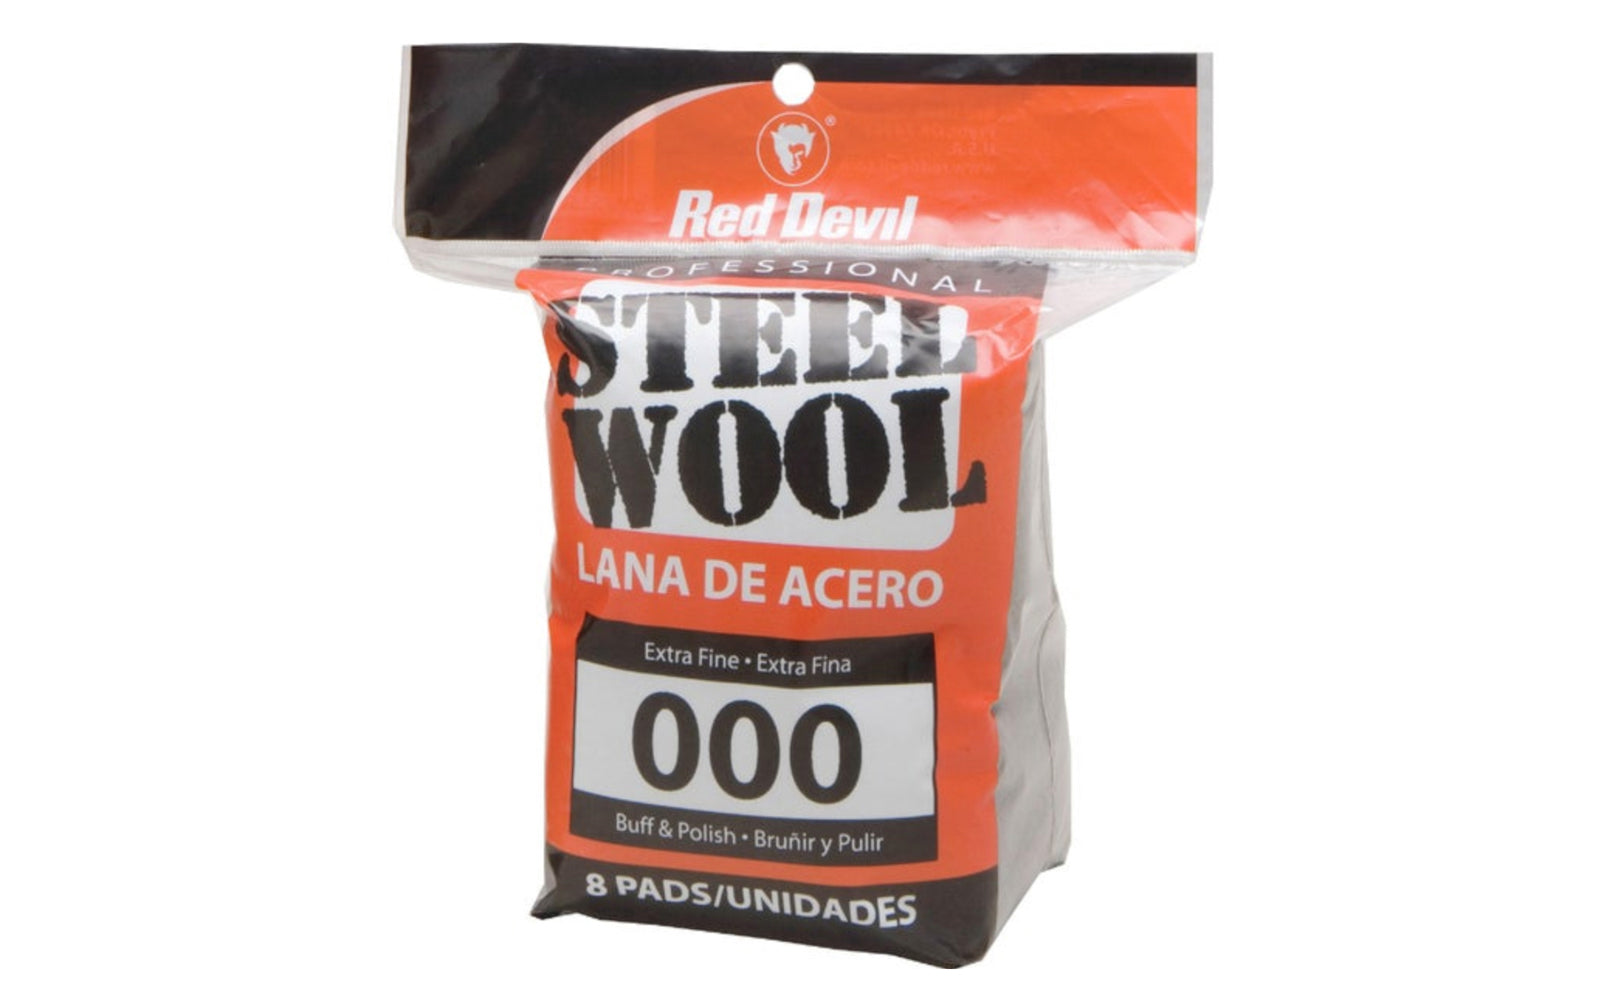 Red Devil #000 Extra Fine Steel Wool - 8 Pack